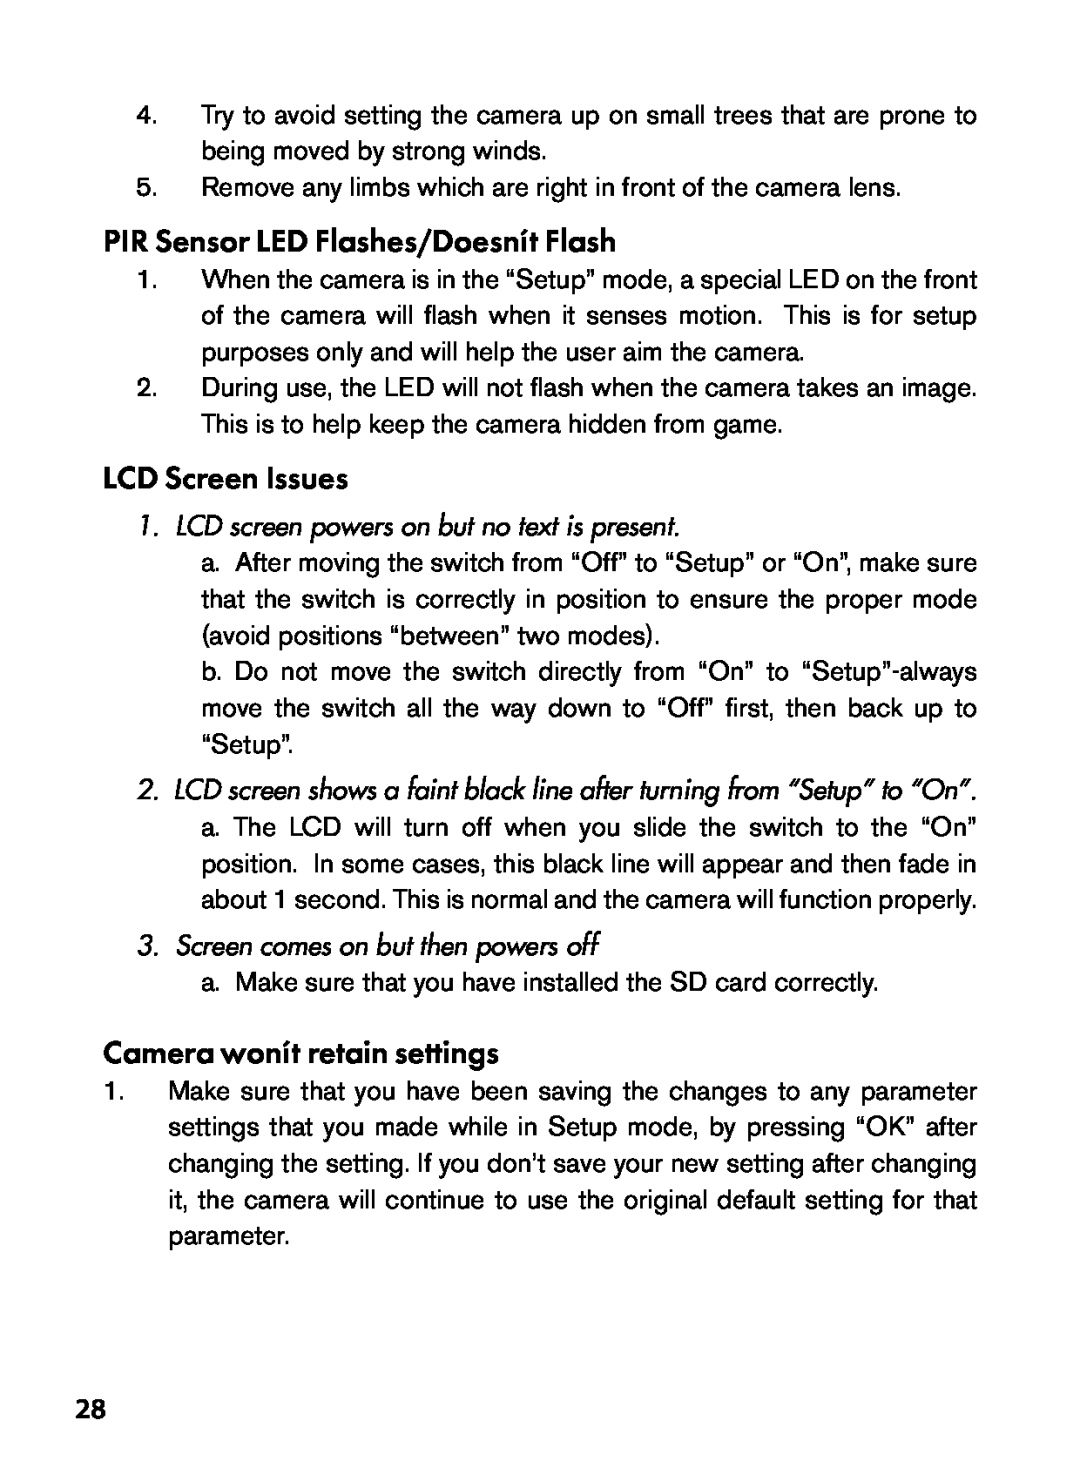 Bushnell 119445, 119455, 119435 PIR Sensor LED Flashes/Doesn’t Flash, LCD Screen Issues, Camera won’t retain settings 